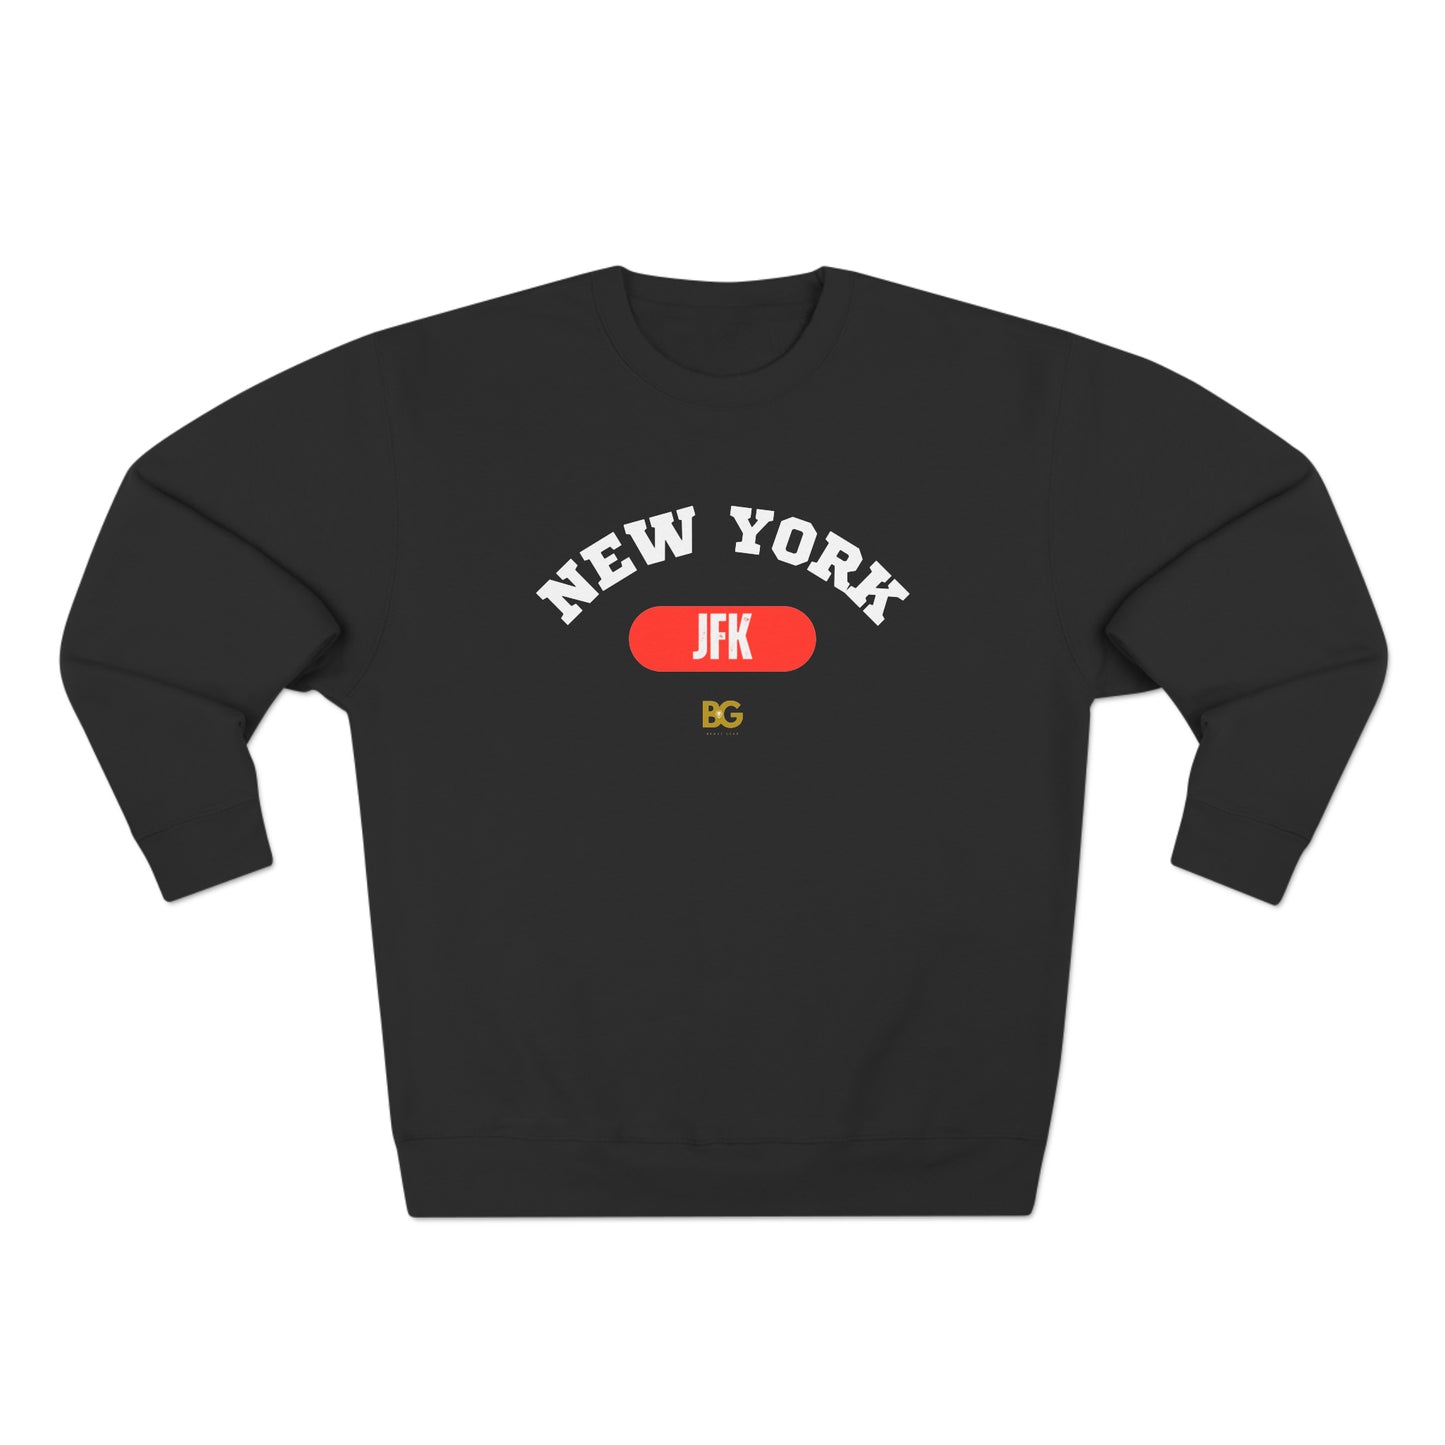 BG "New York JFK" Premium Crewneck Sweatshirt